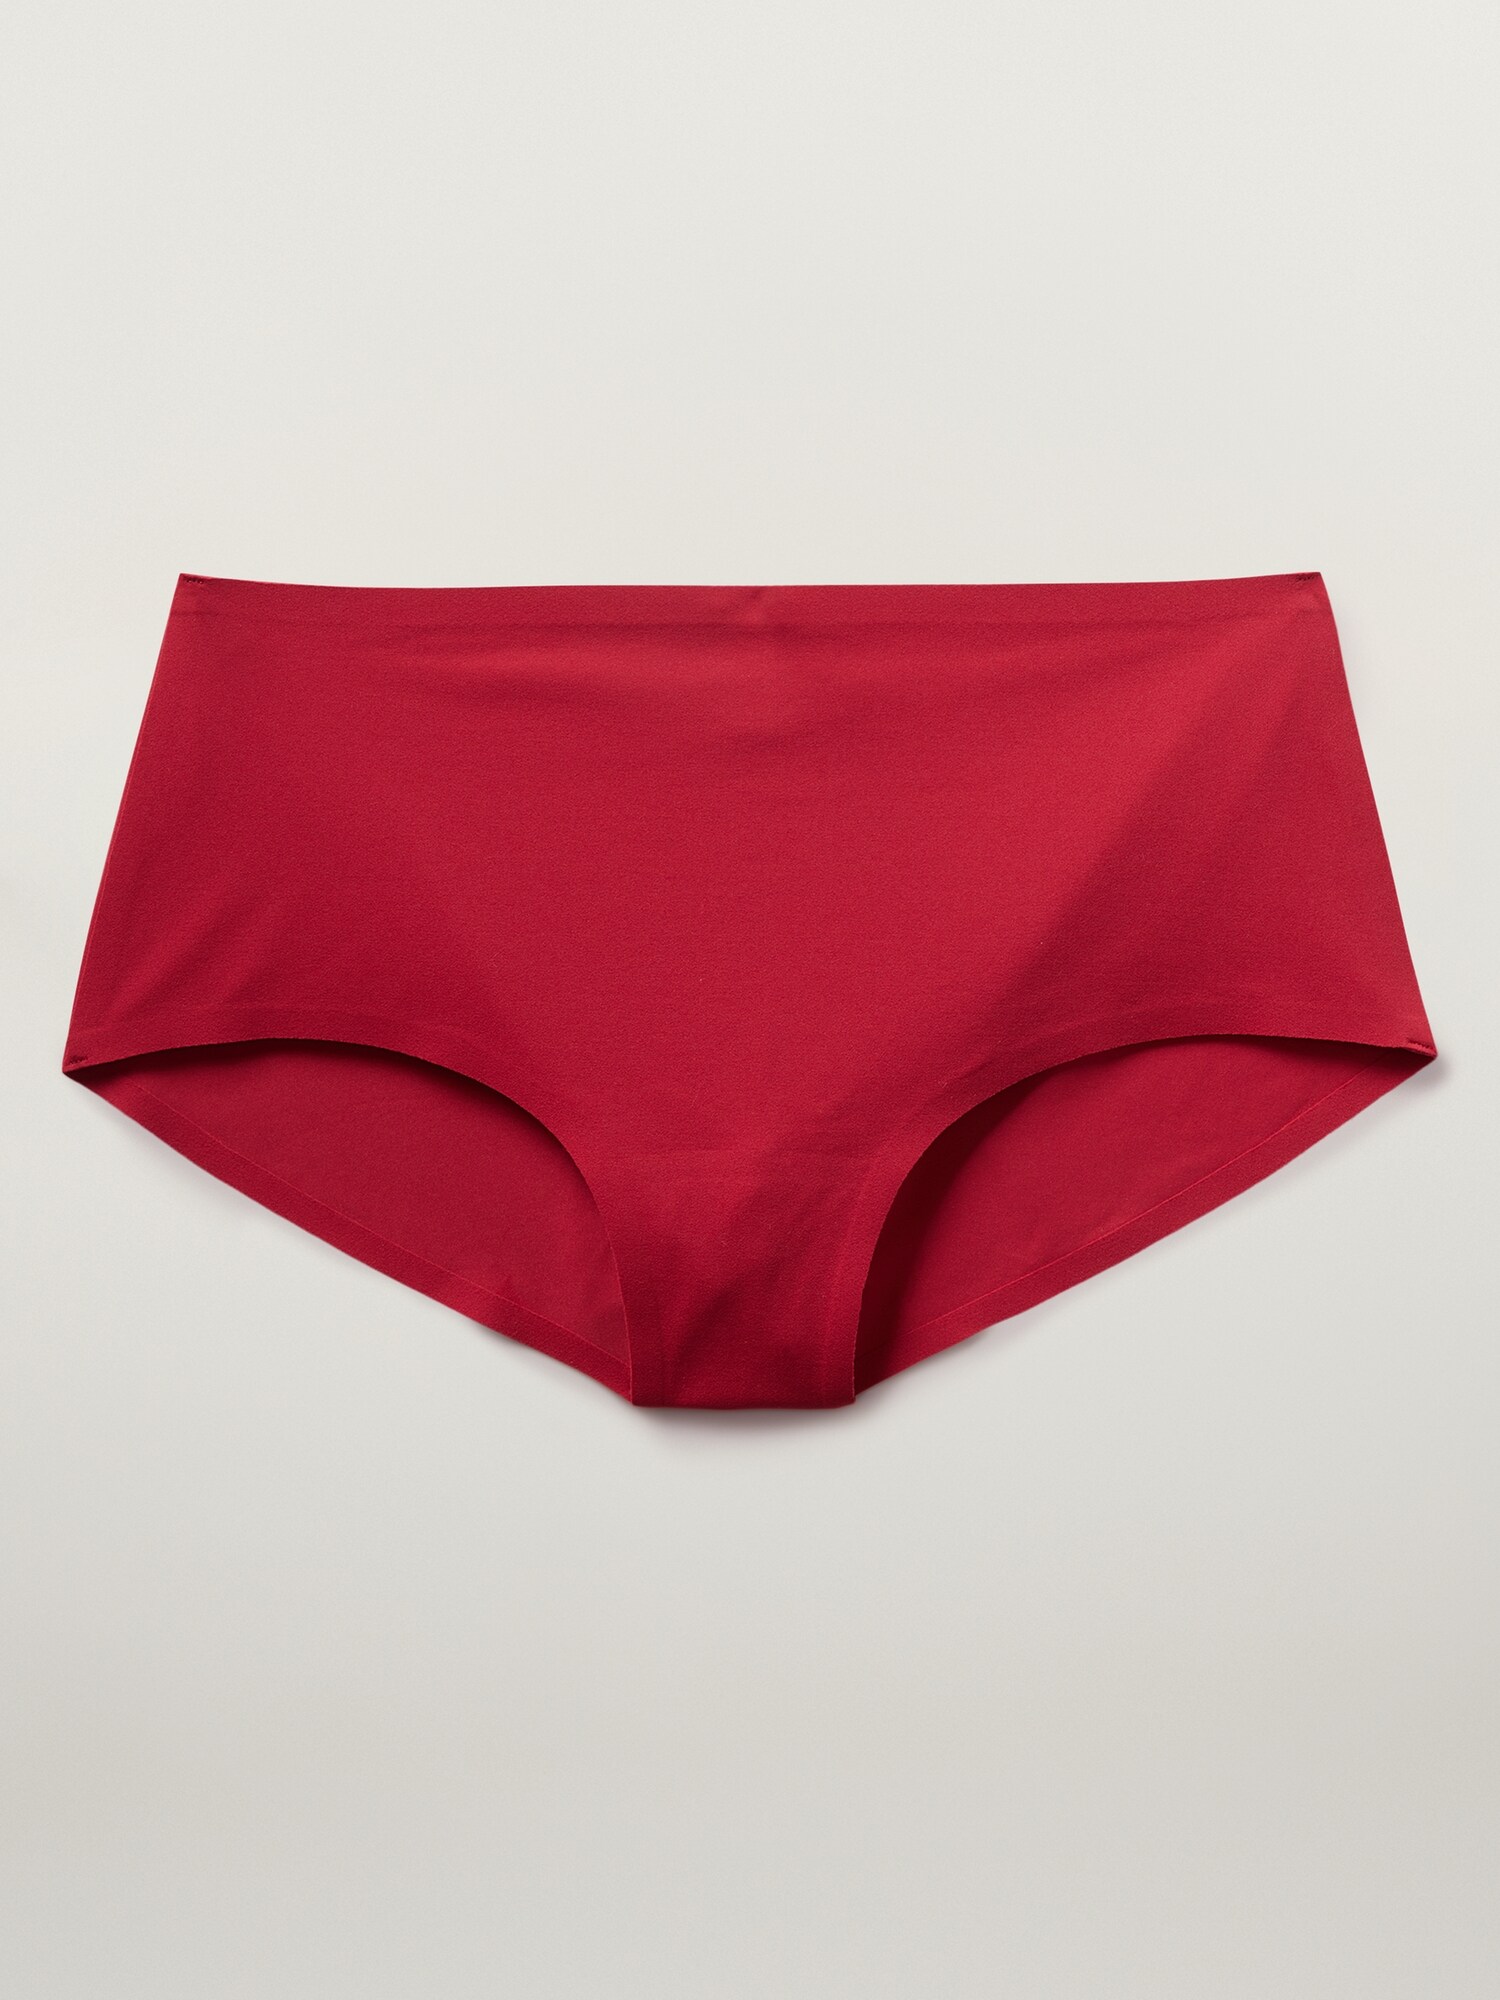 2 pcs American Apparel Boyshort Panties (Red) Women Underwear NWOT